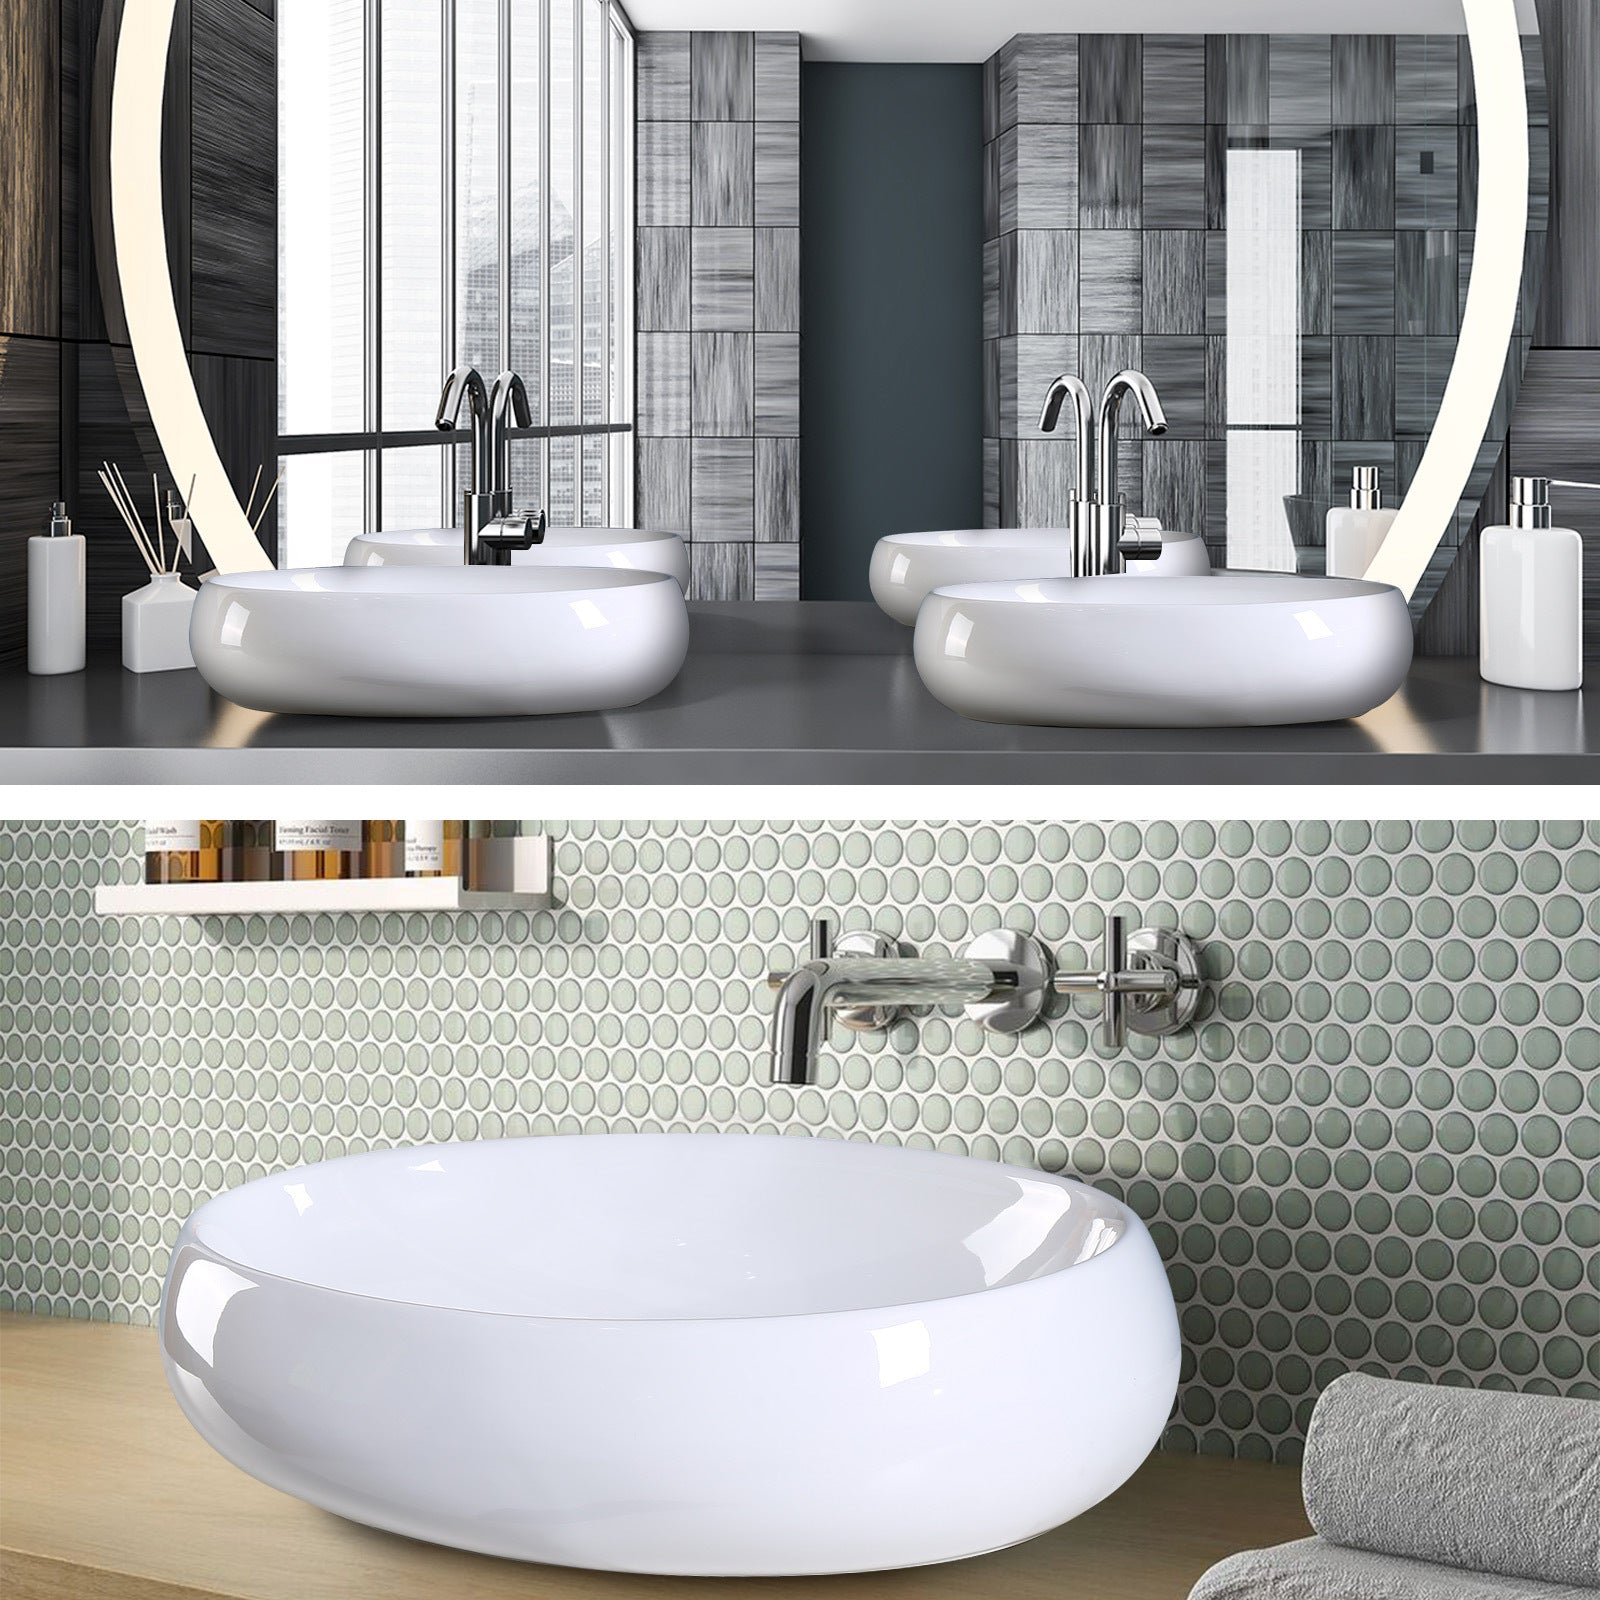 Muriel 59 x 40 x 14.5cm White Ceramic Bathroom Basin Vanity Sink Oval Above Counter Top Mount Bowl